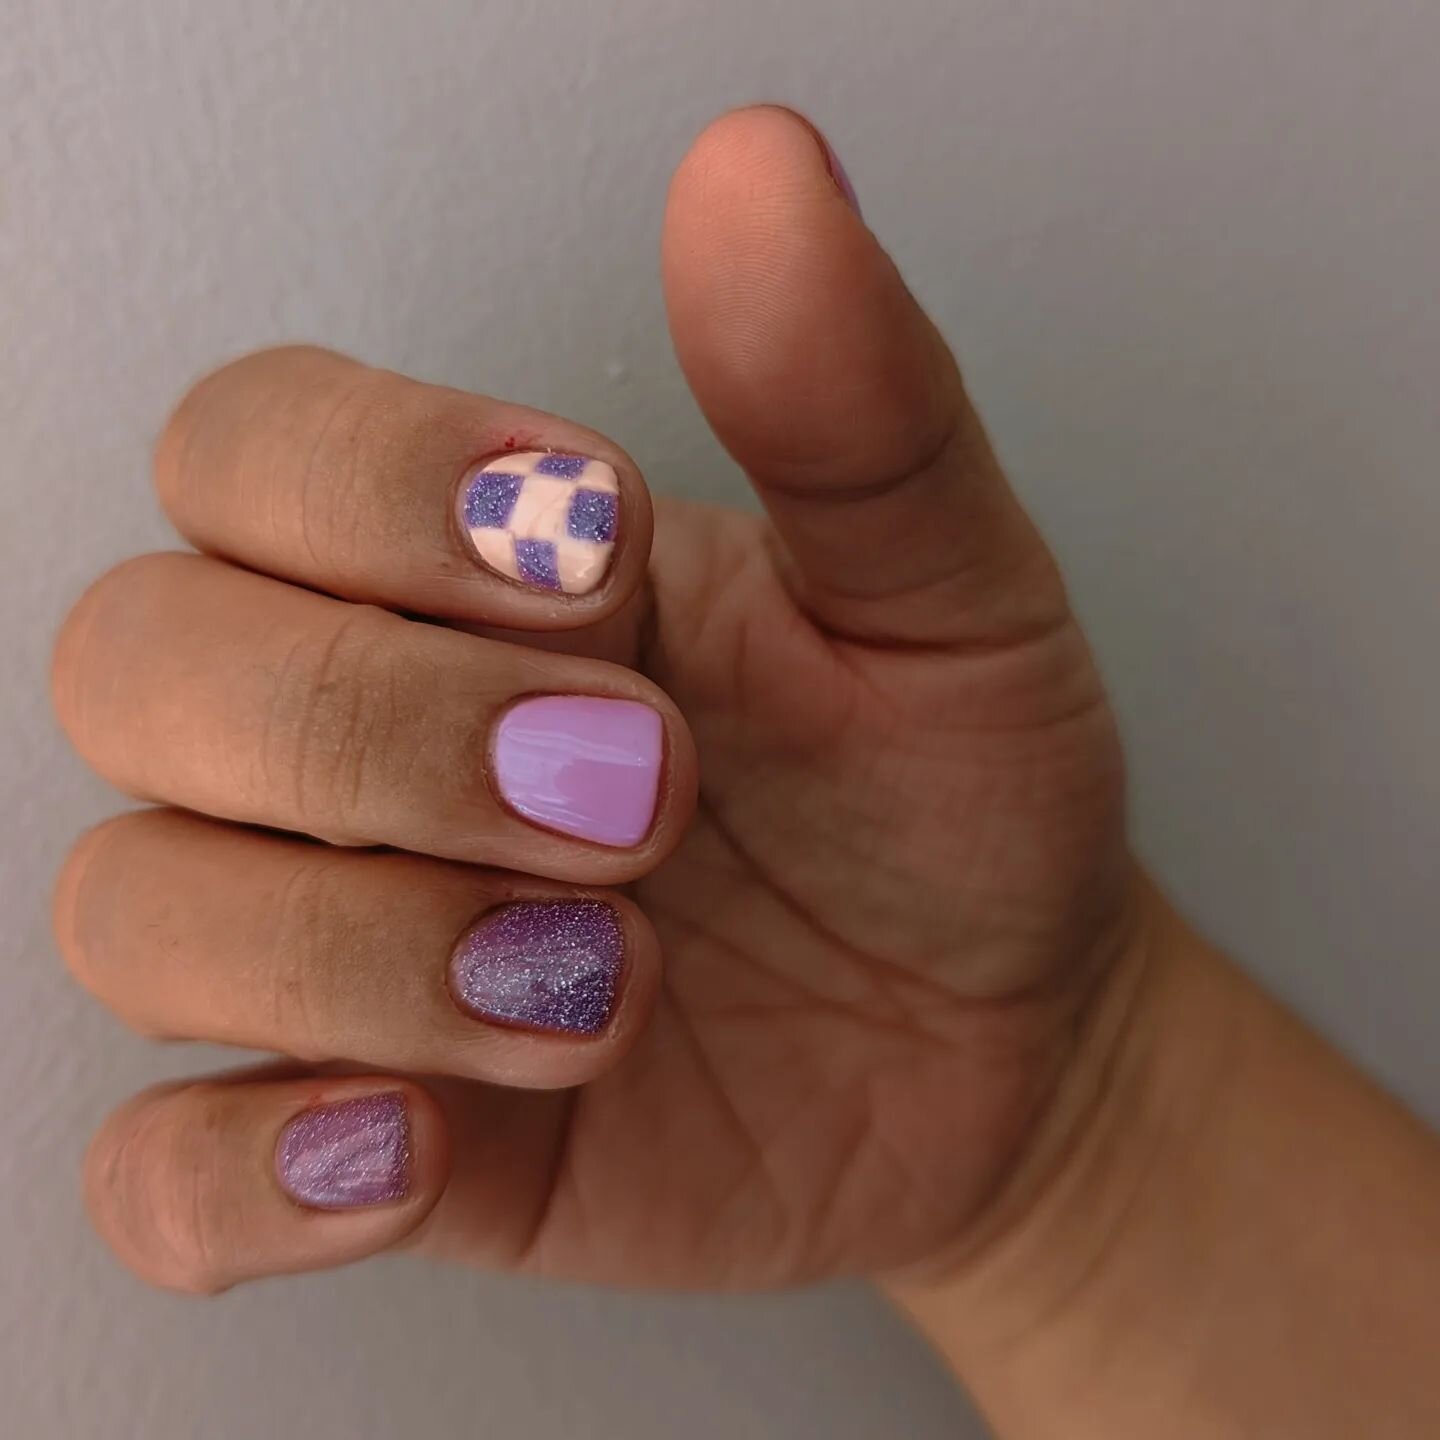 A little glitter never hurt anyone

#retreatyourself #lilacnails #purplenails #gelnails #nailart #manioftheday #nailsofinstagram #instanails #manioftheday #checkerednails